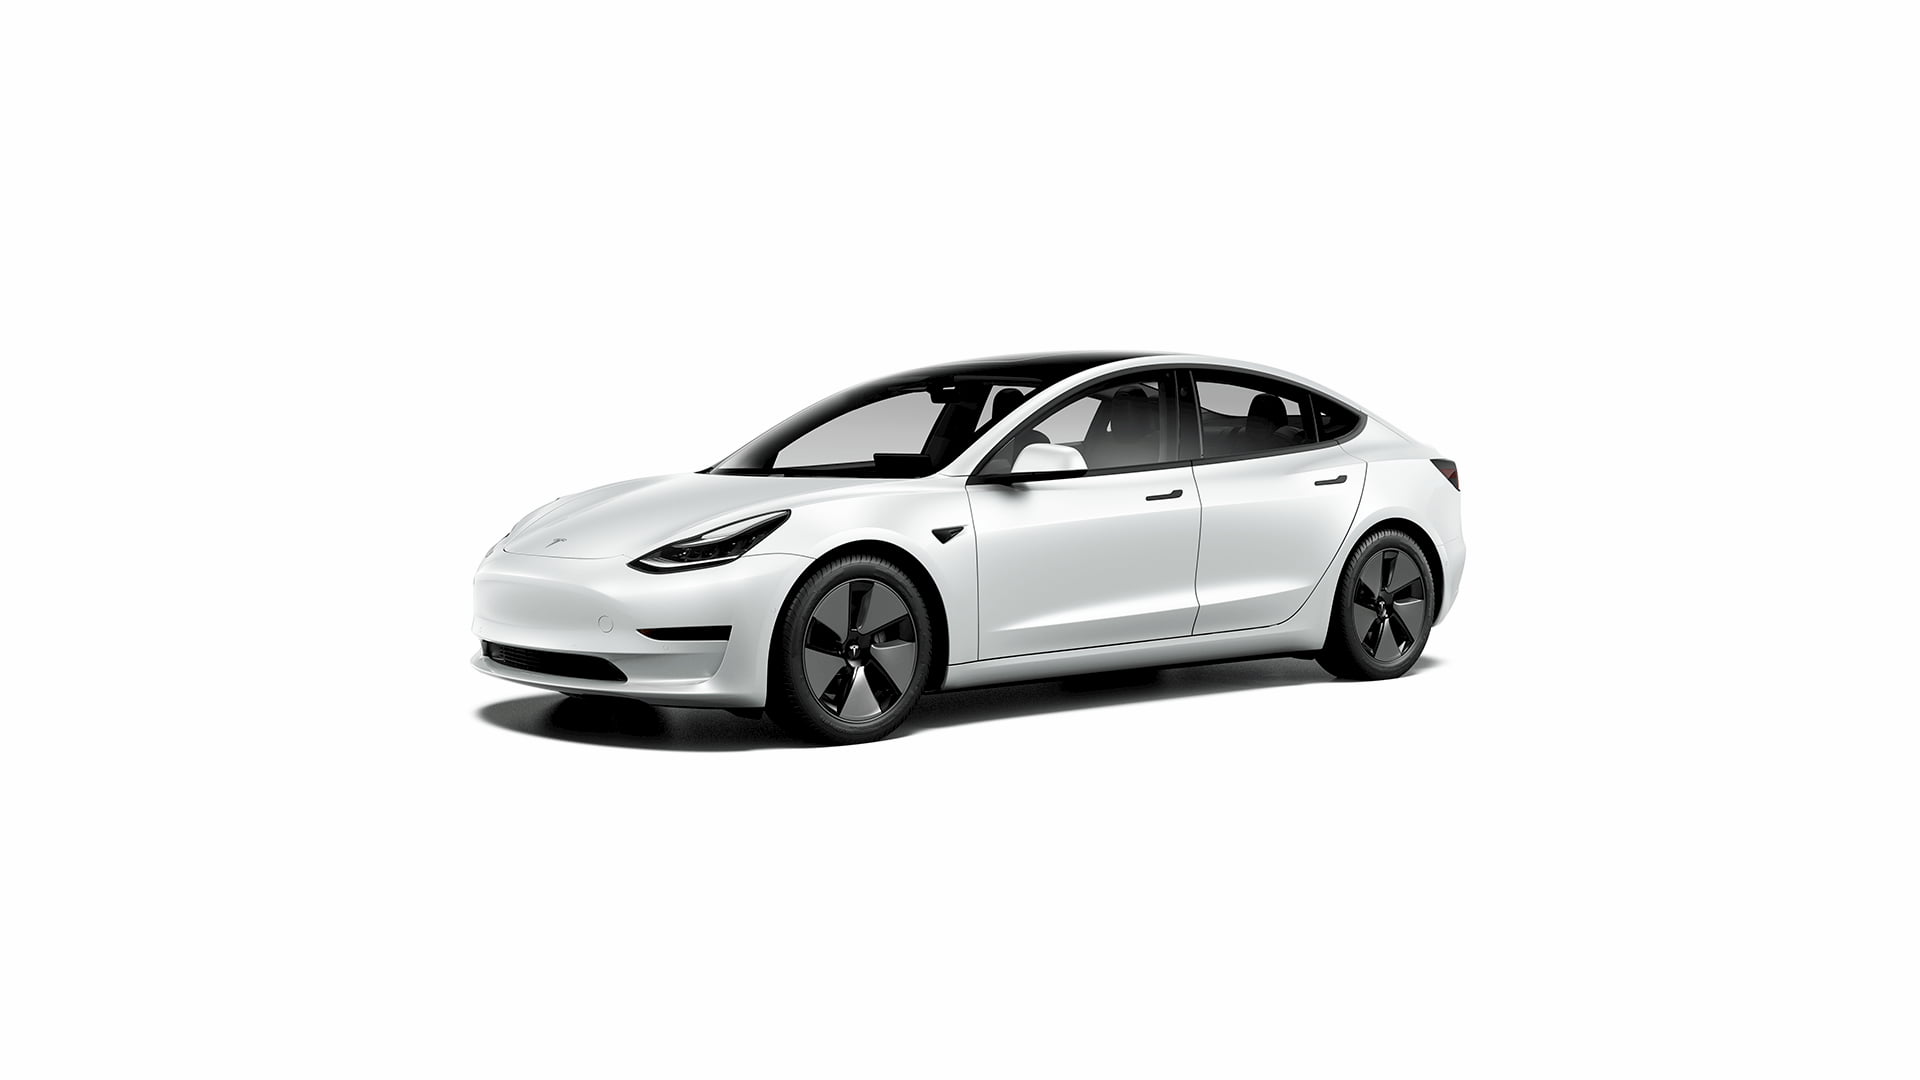 Base Tesla Model 3 Standard Range Plus white front quarters